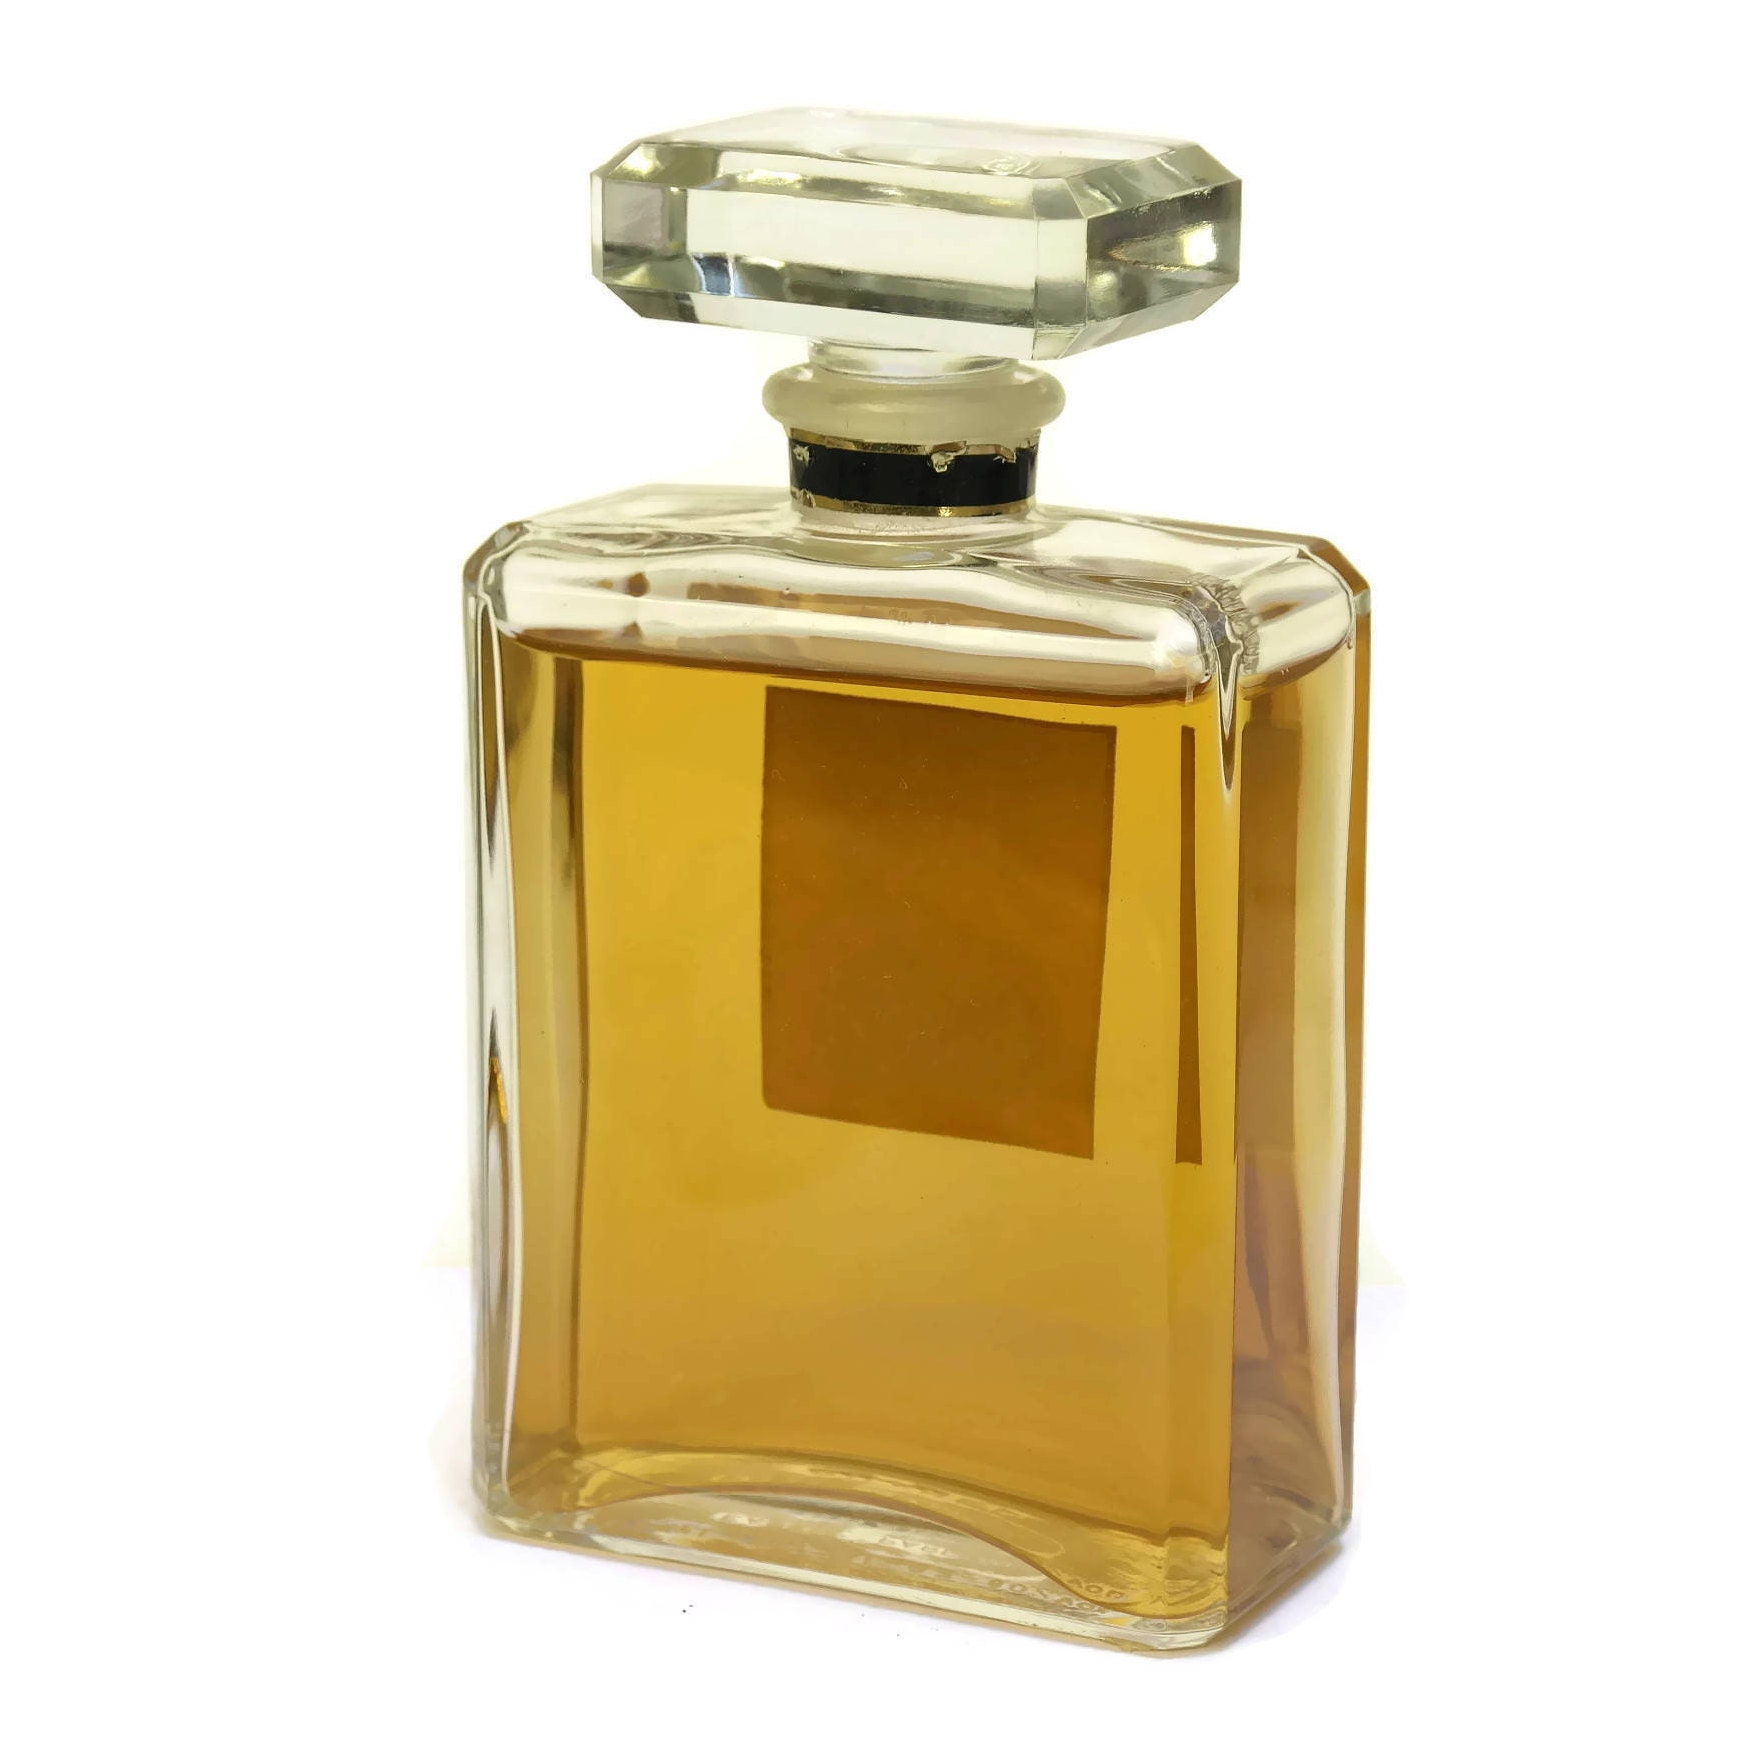 Giant - Factice Perfume bottles Catalogue - LastDodo